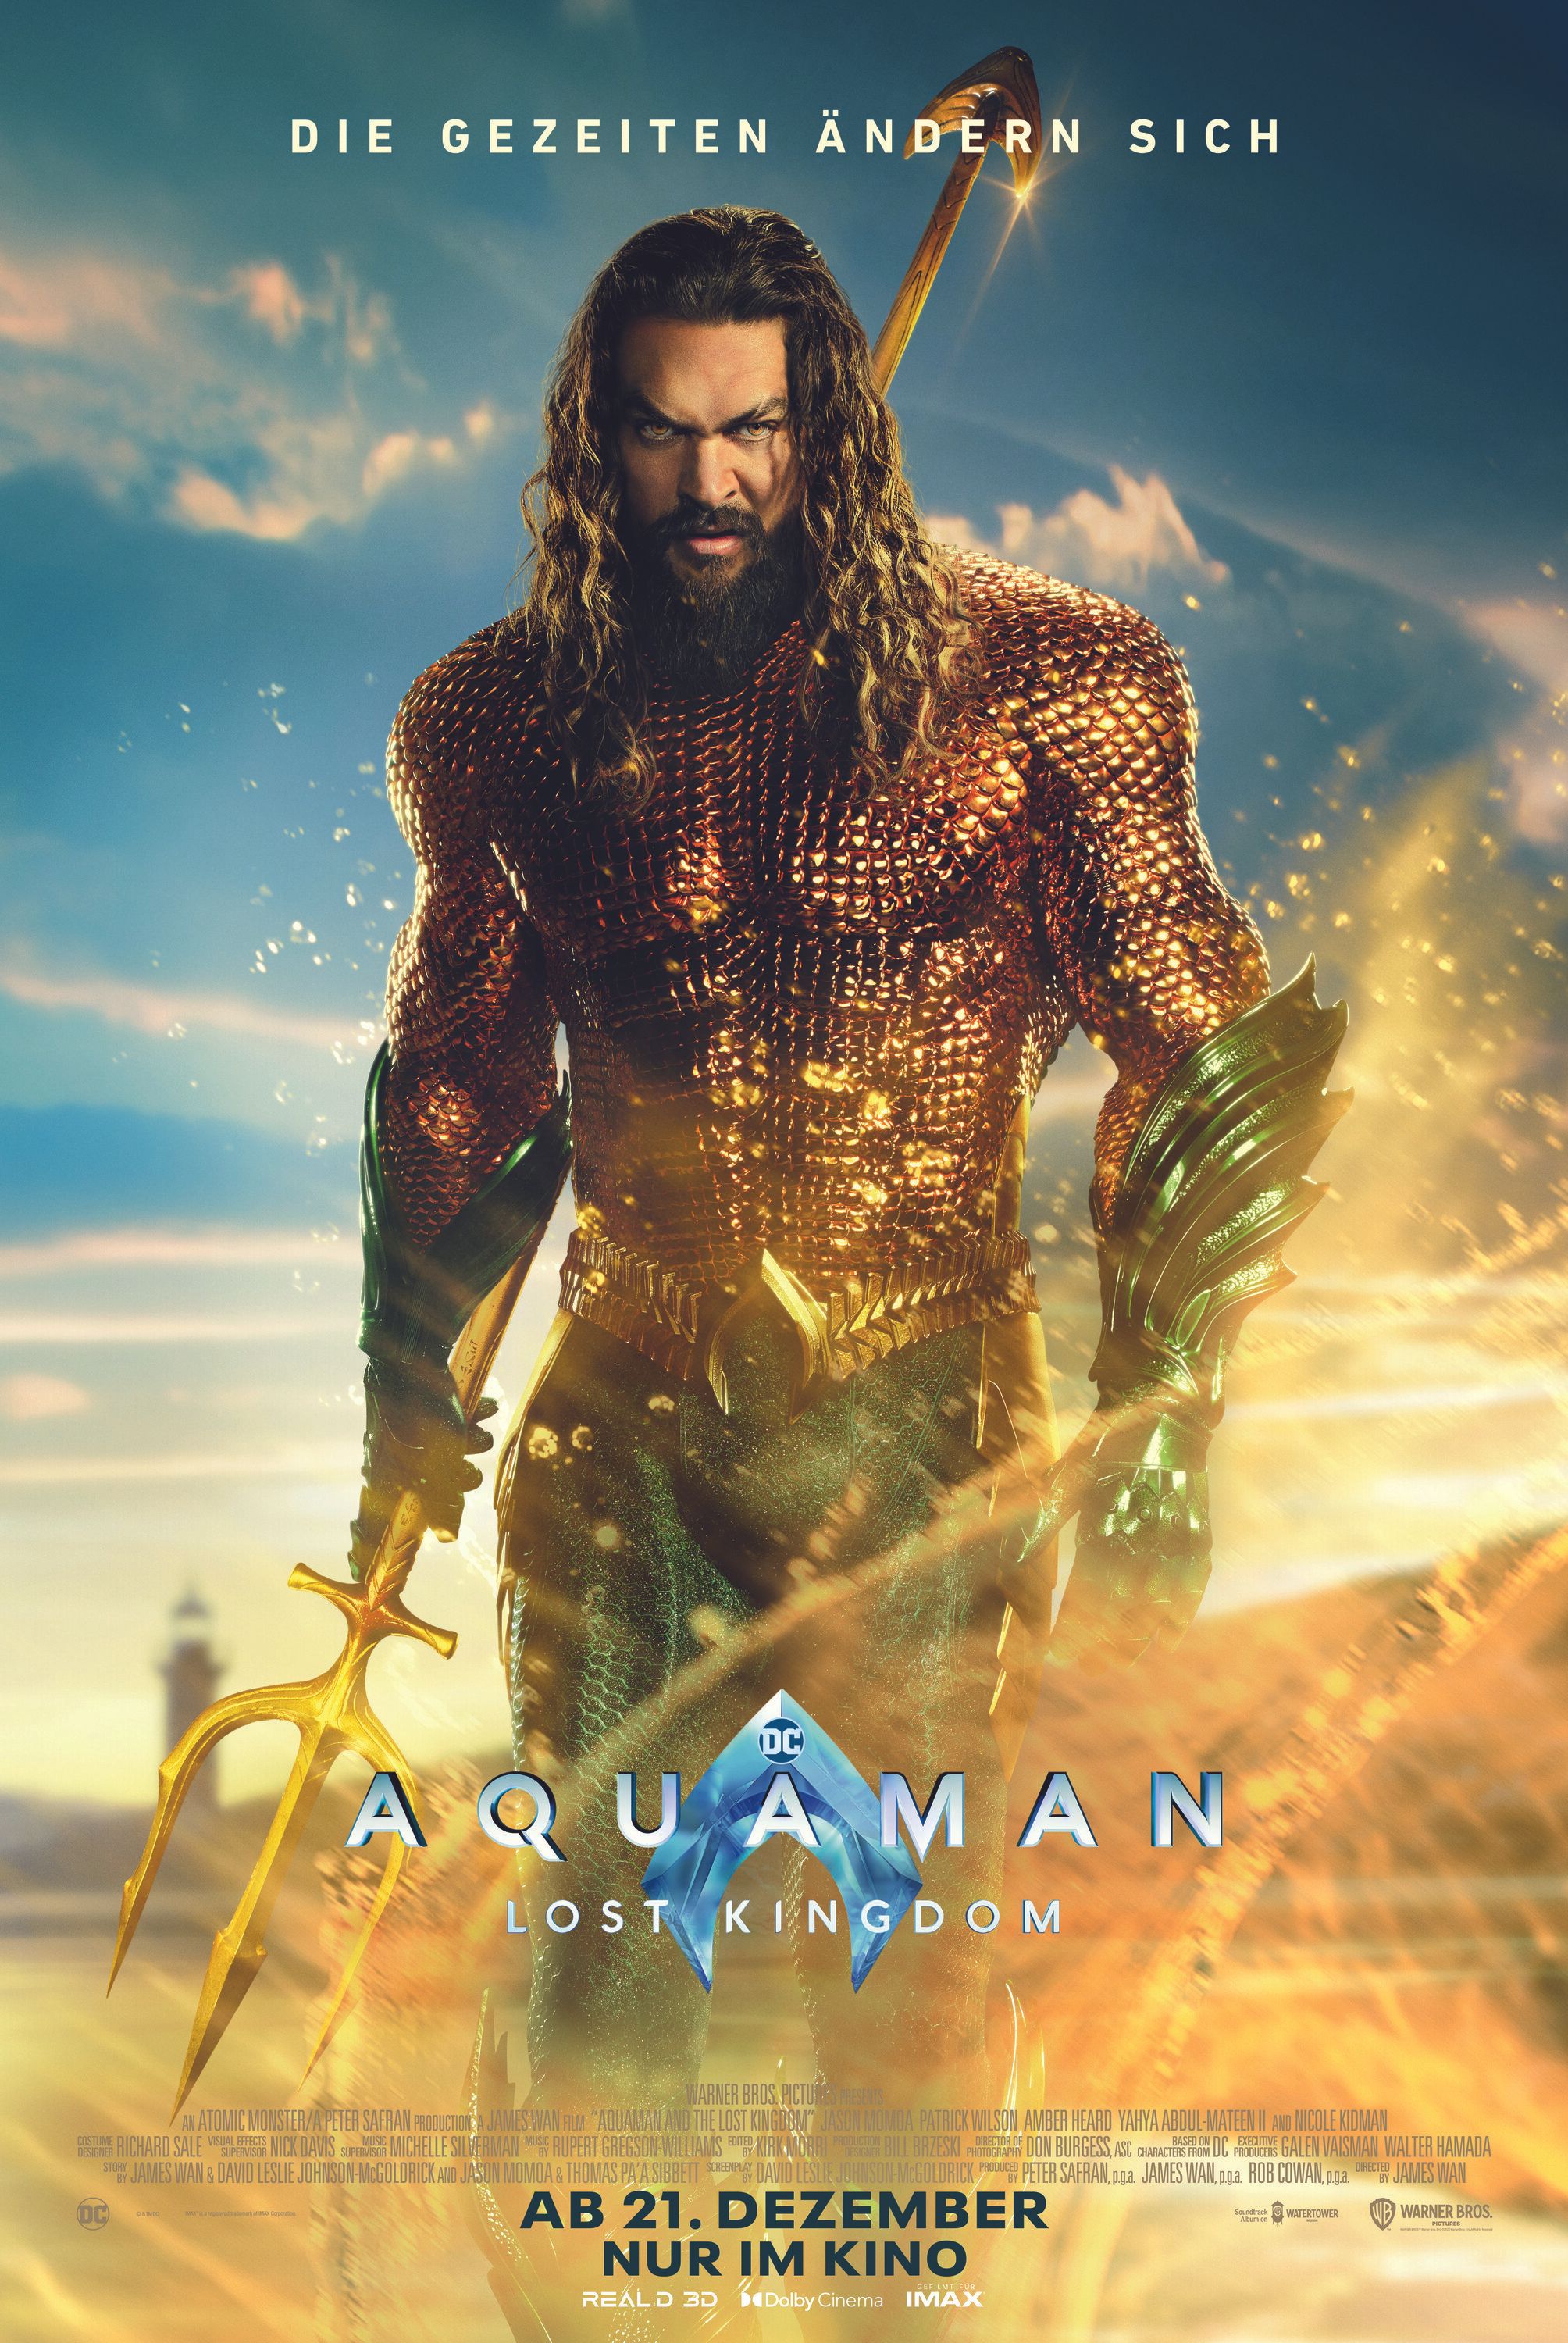 Aquaman 2 Lost Kingdom (2023) Filminformation und Trailer KinoCheck